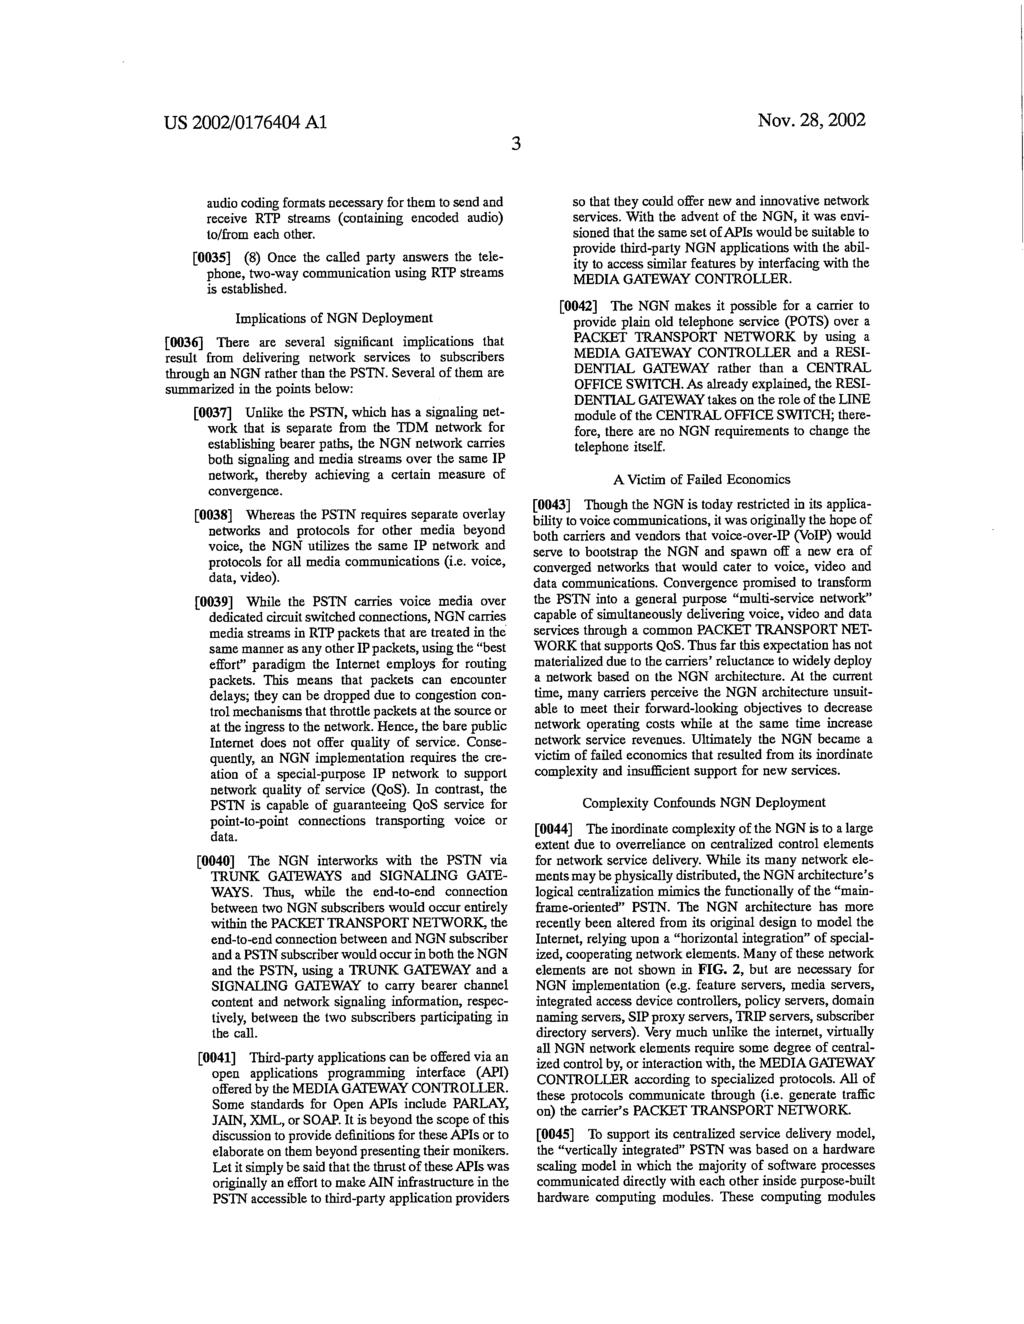 Case 5:07-cv-00156-DF-CMC Document